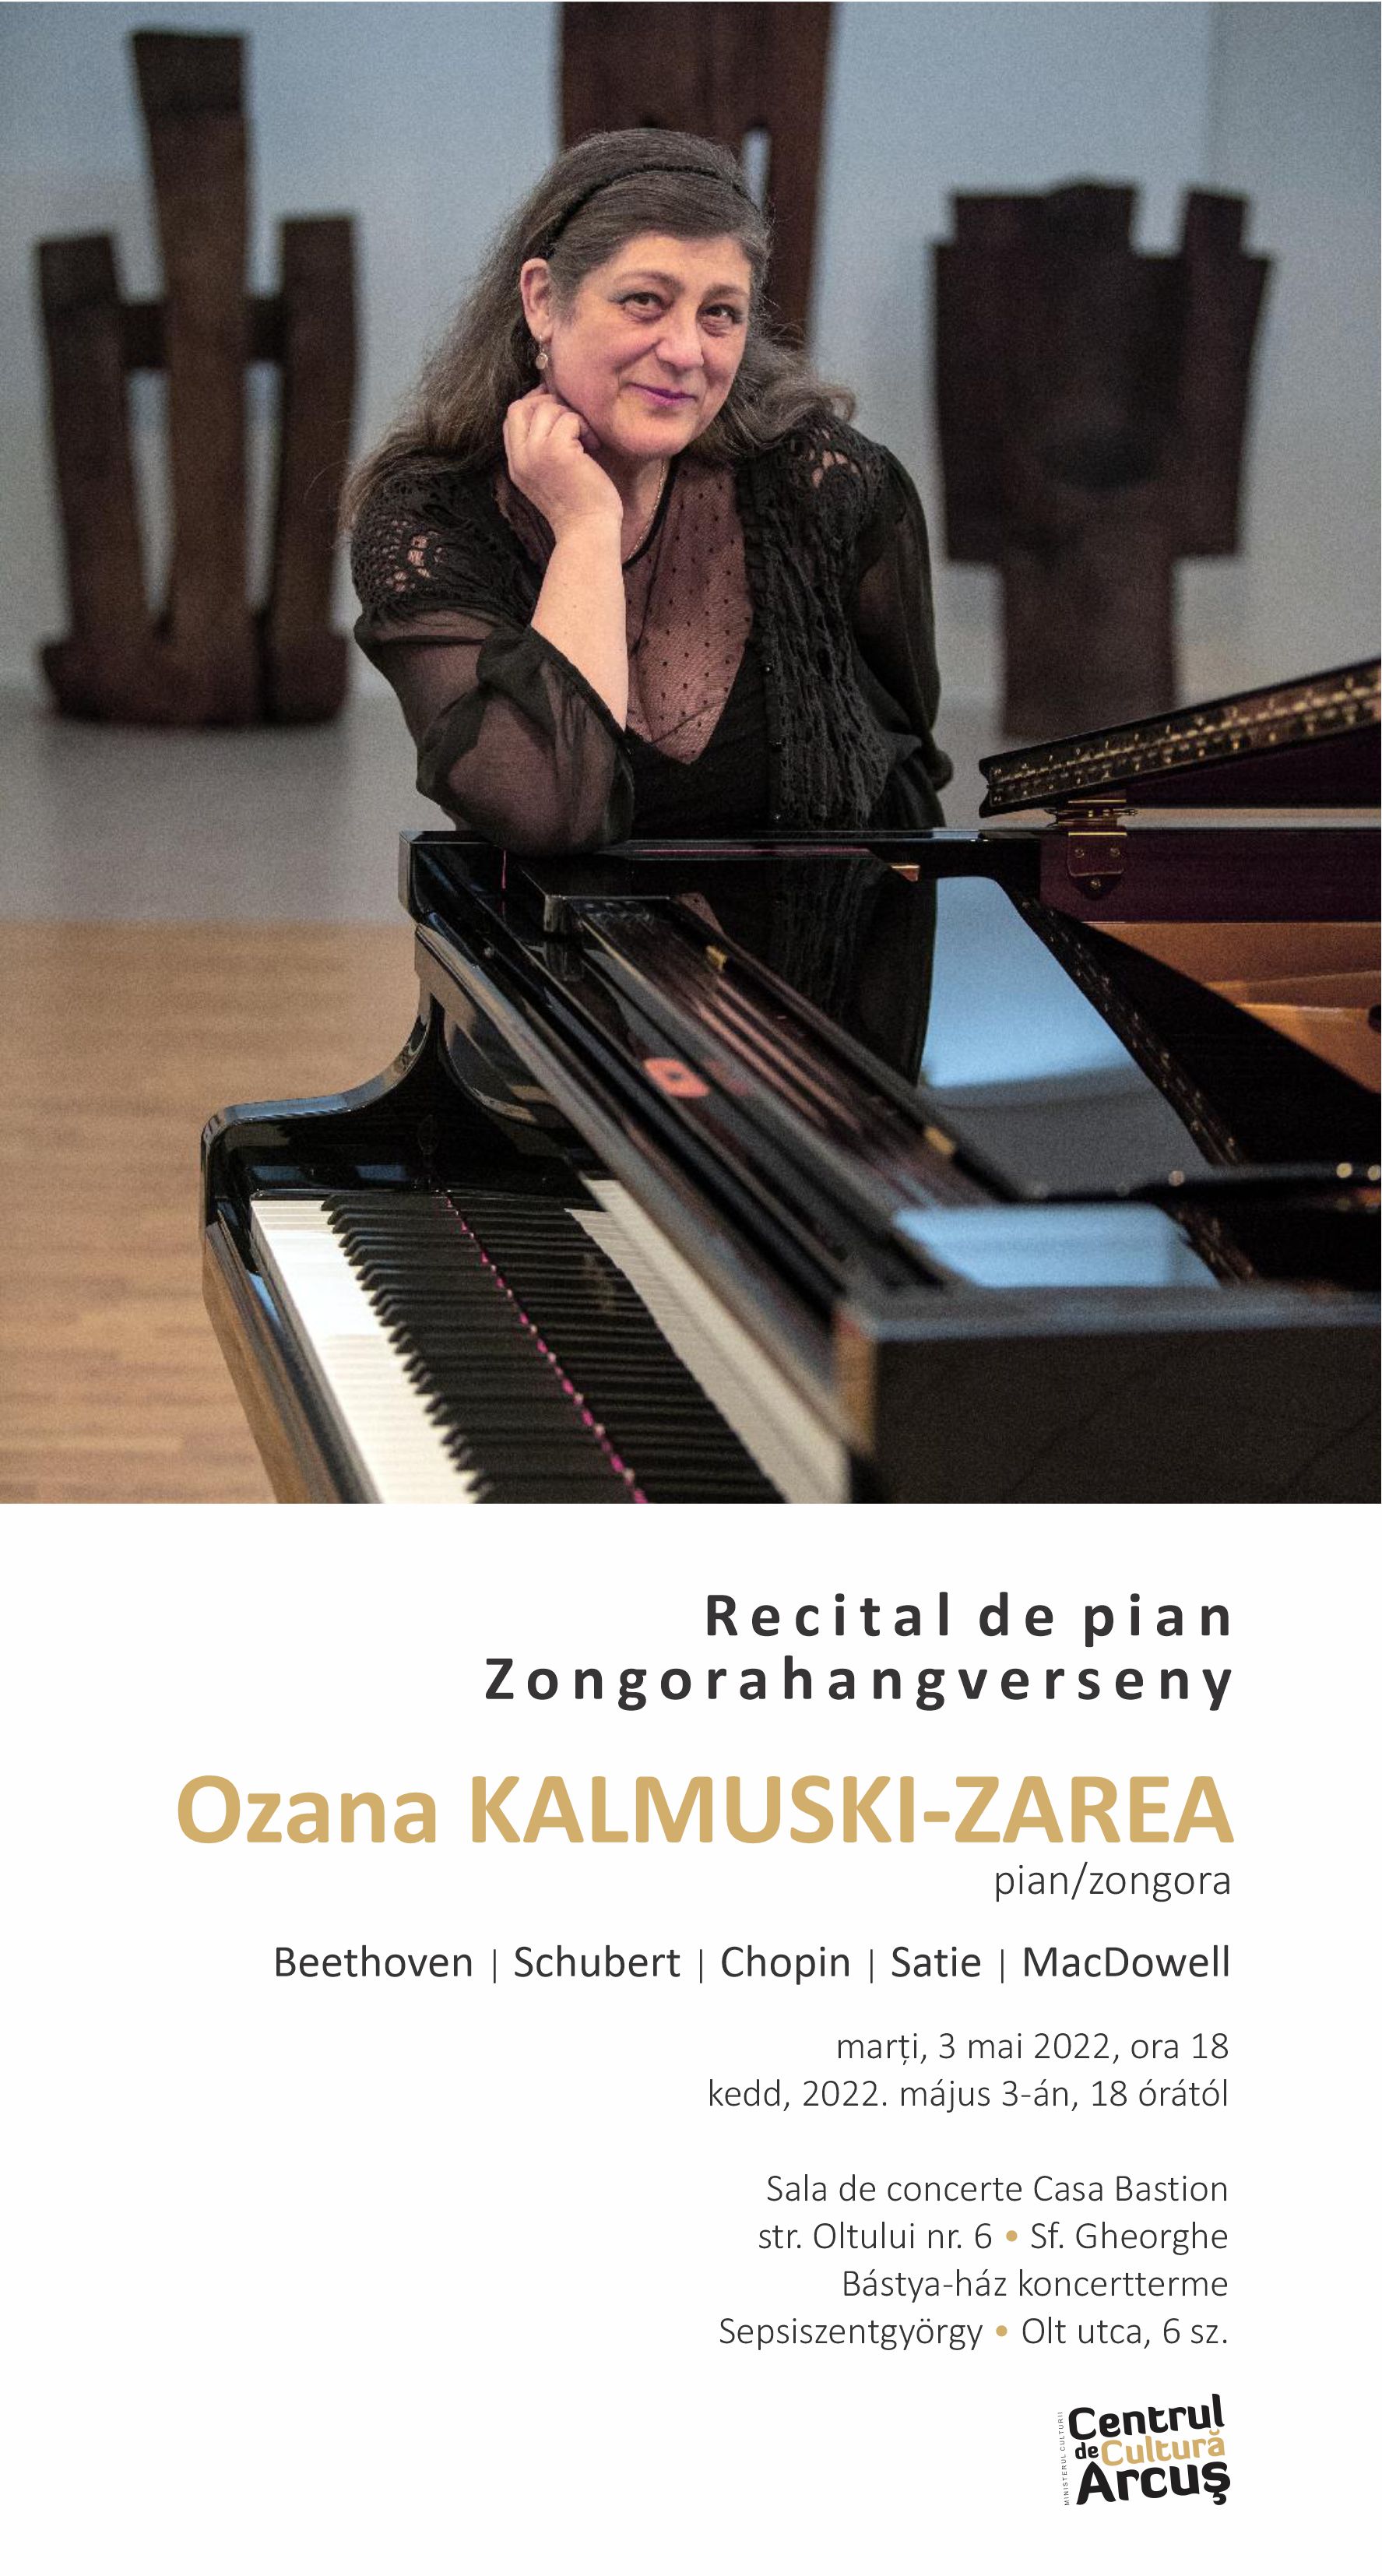 Ozana KALMUSKI-ZAREA - RECITAL DE PIAN 